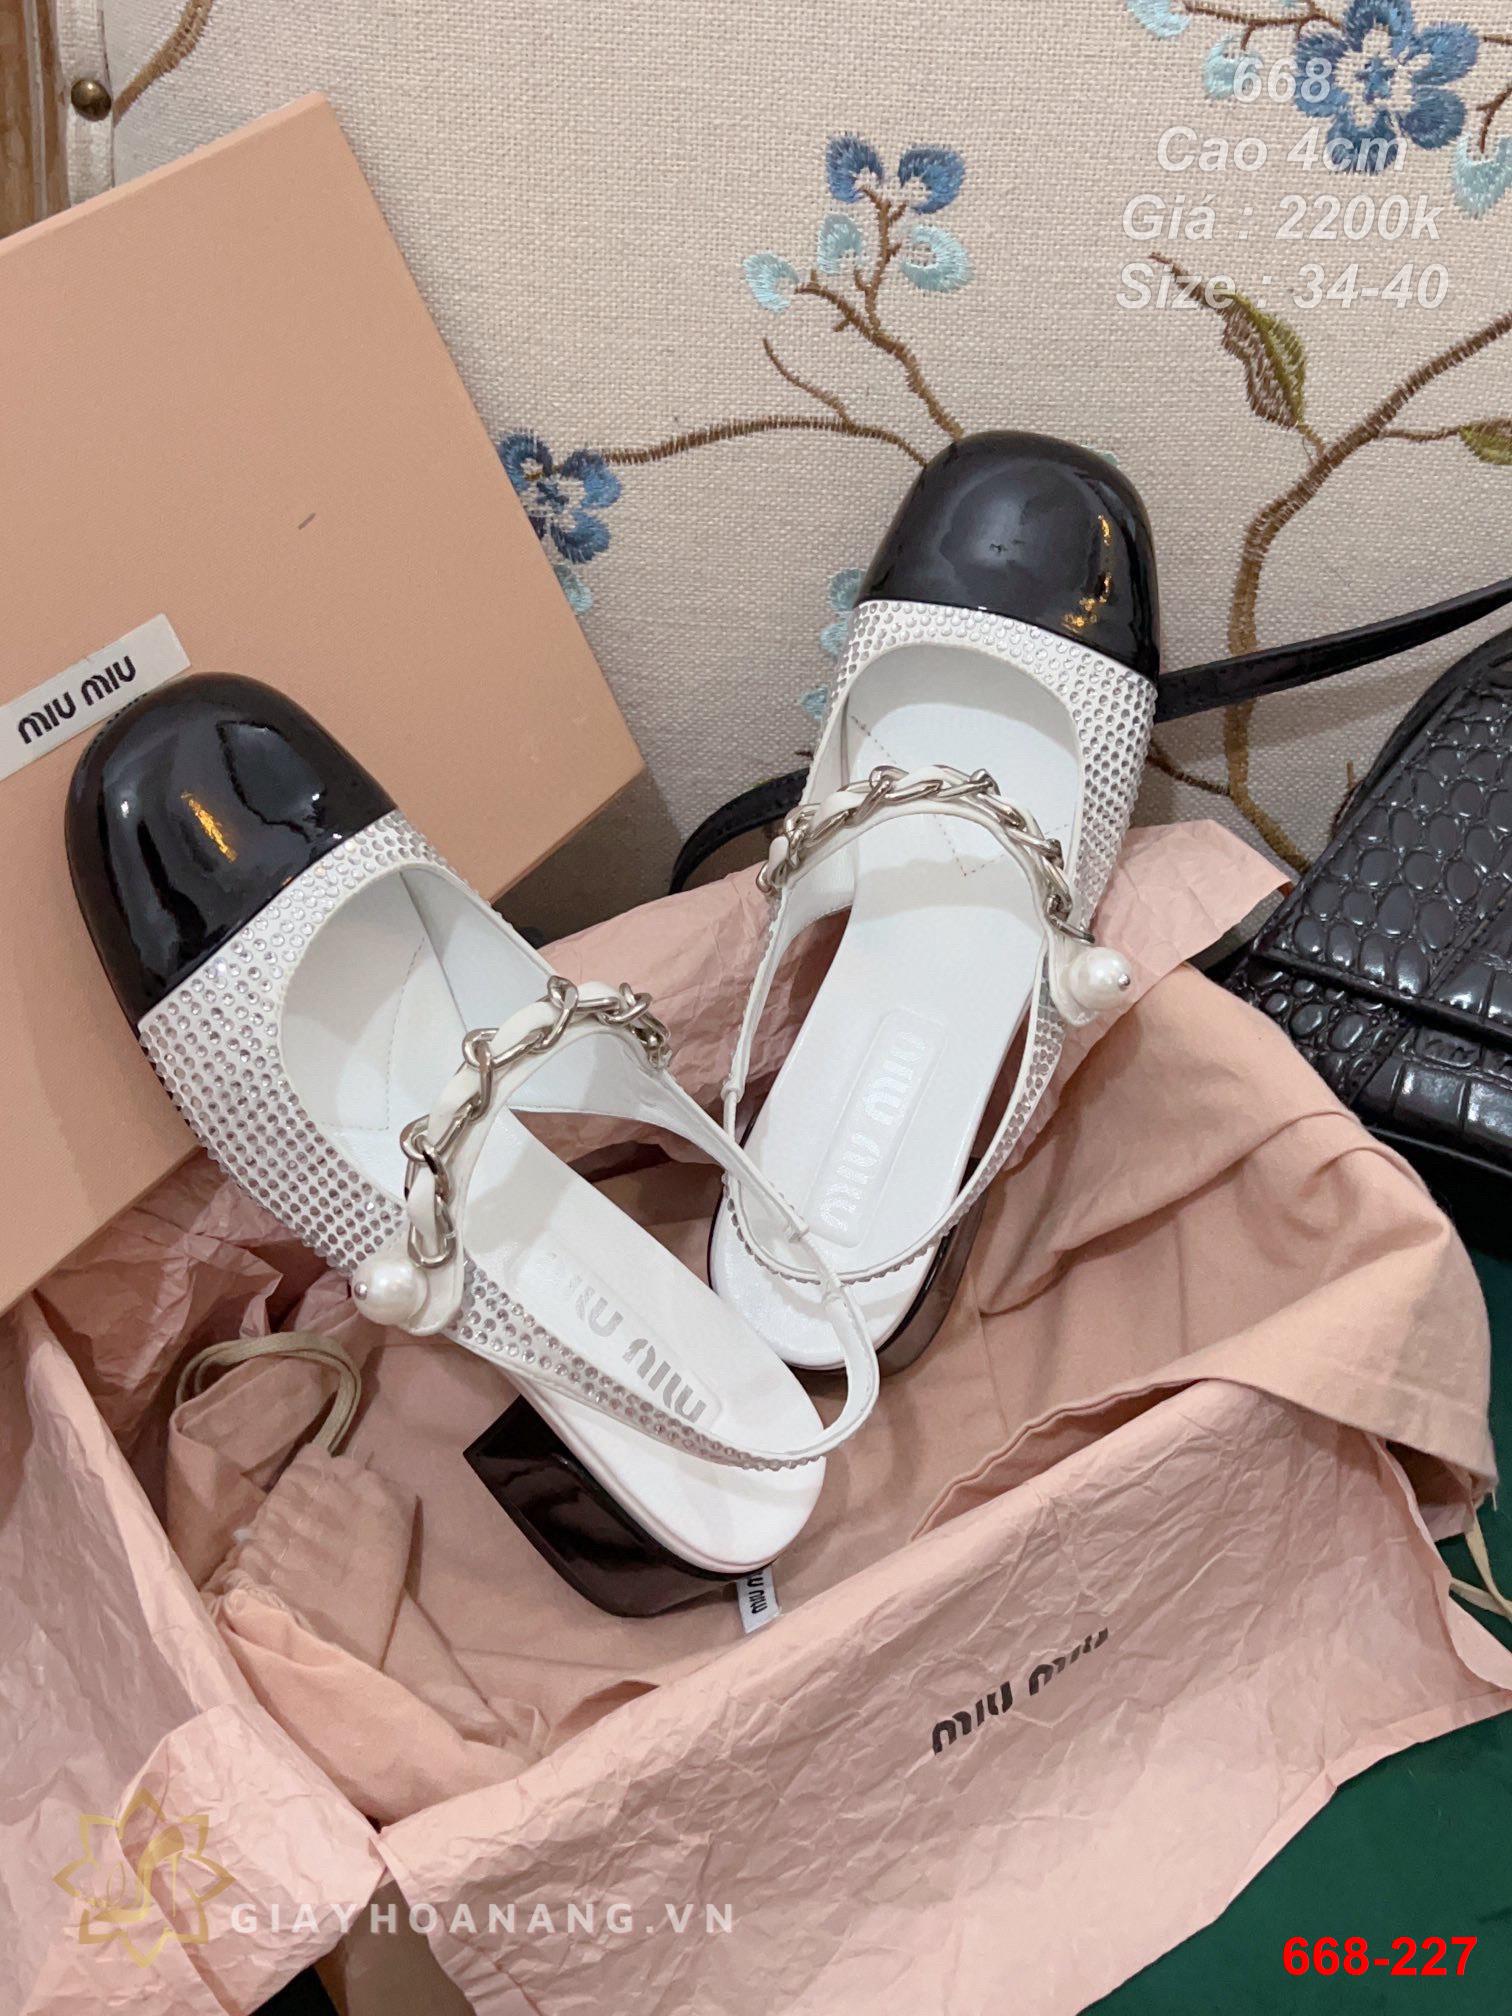 668-227 Miu Miu sandal cao 4cm siêu cấp